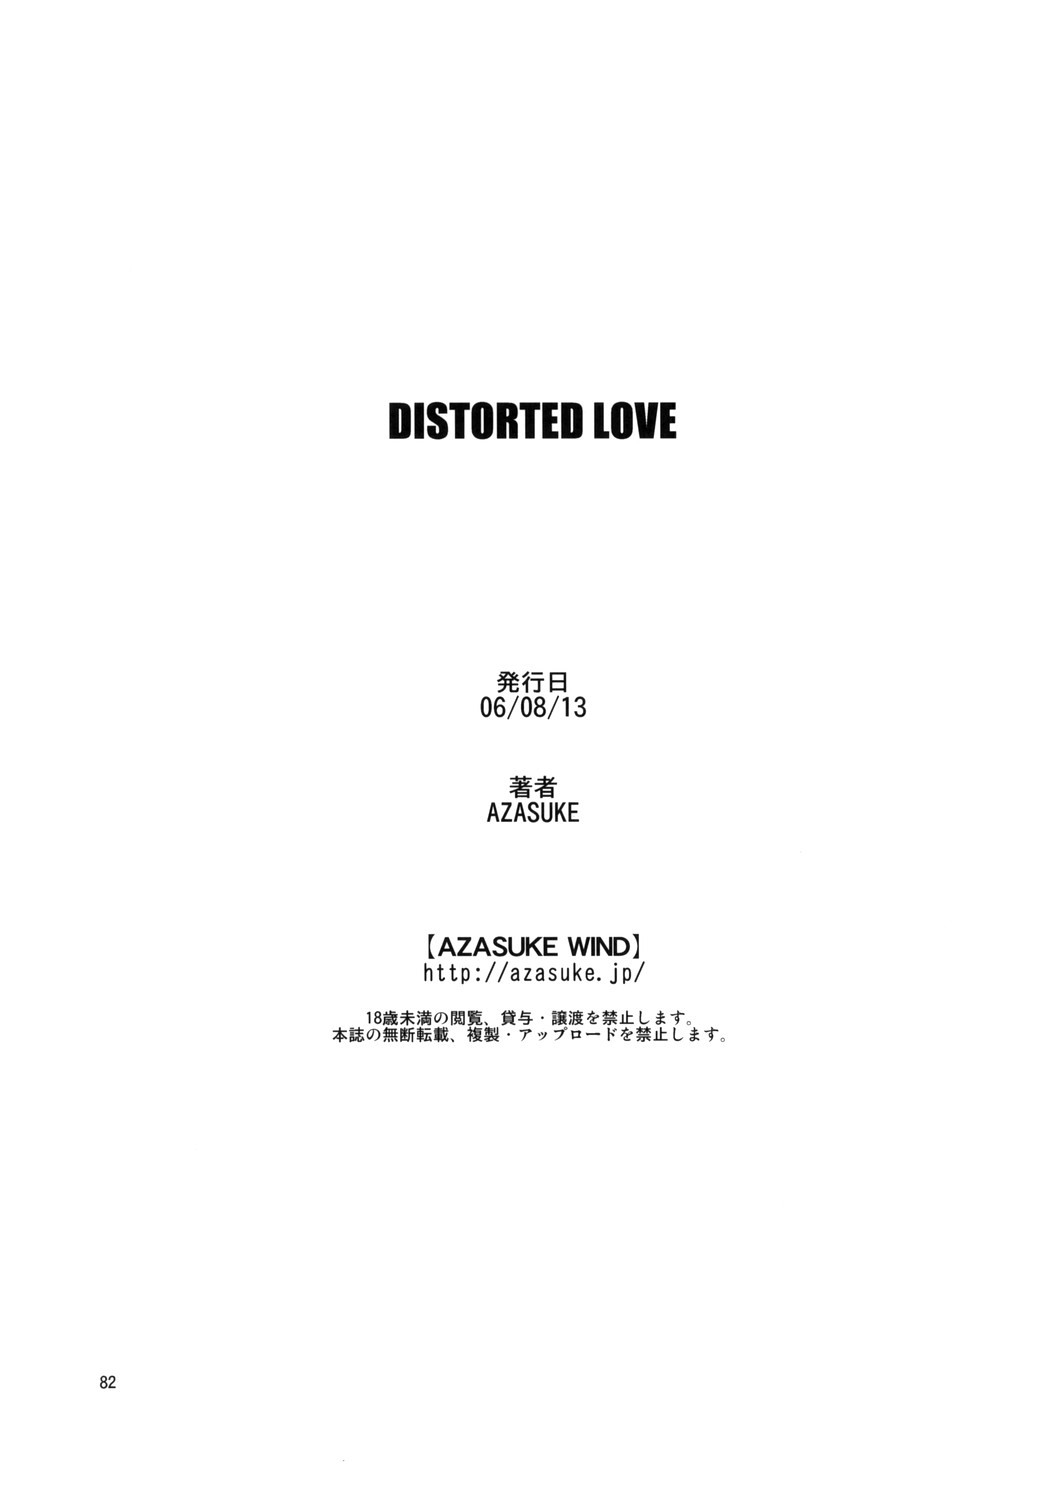 Distorted Love numero d'image 80